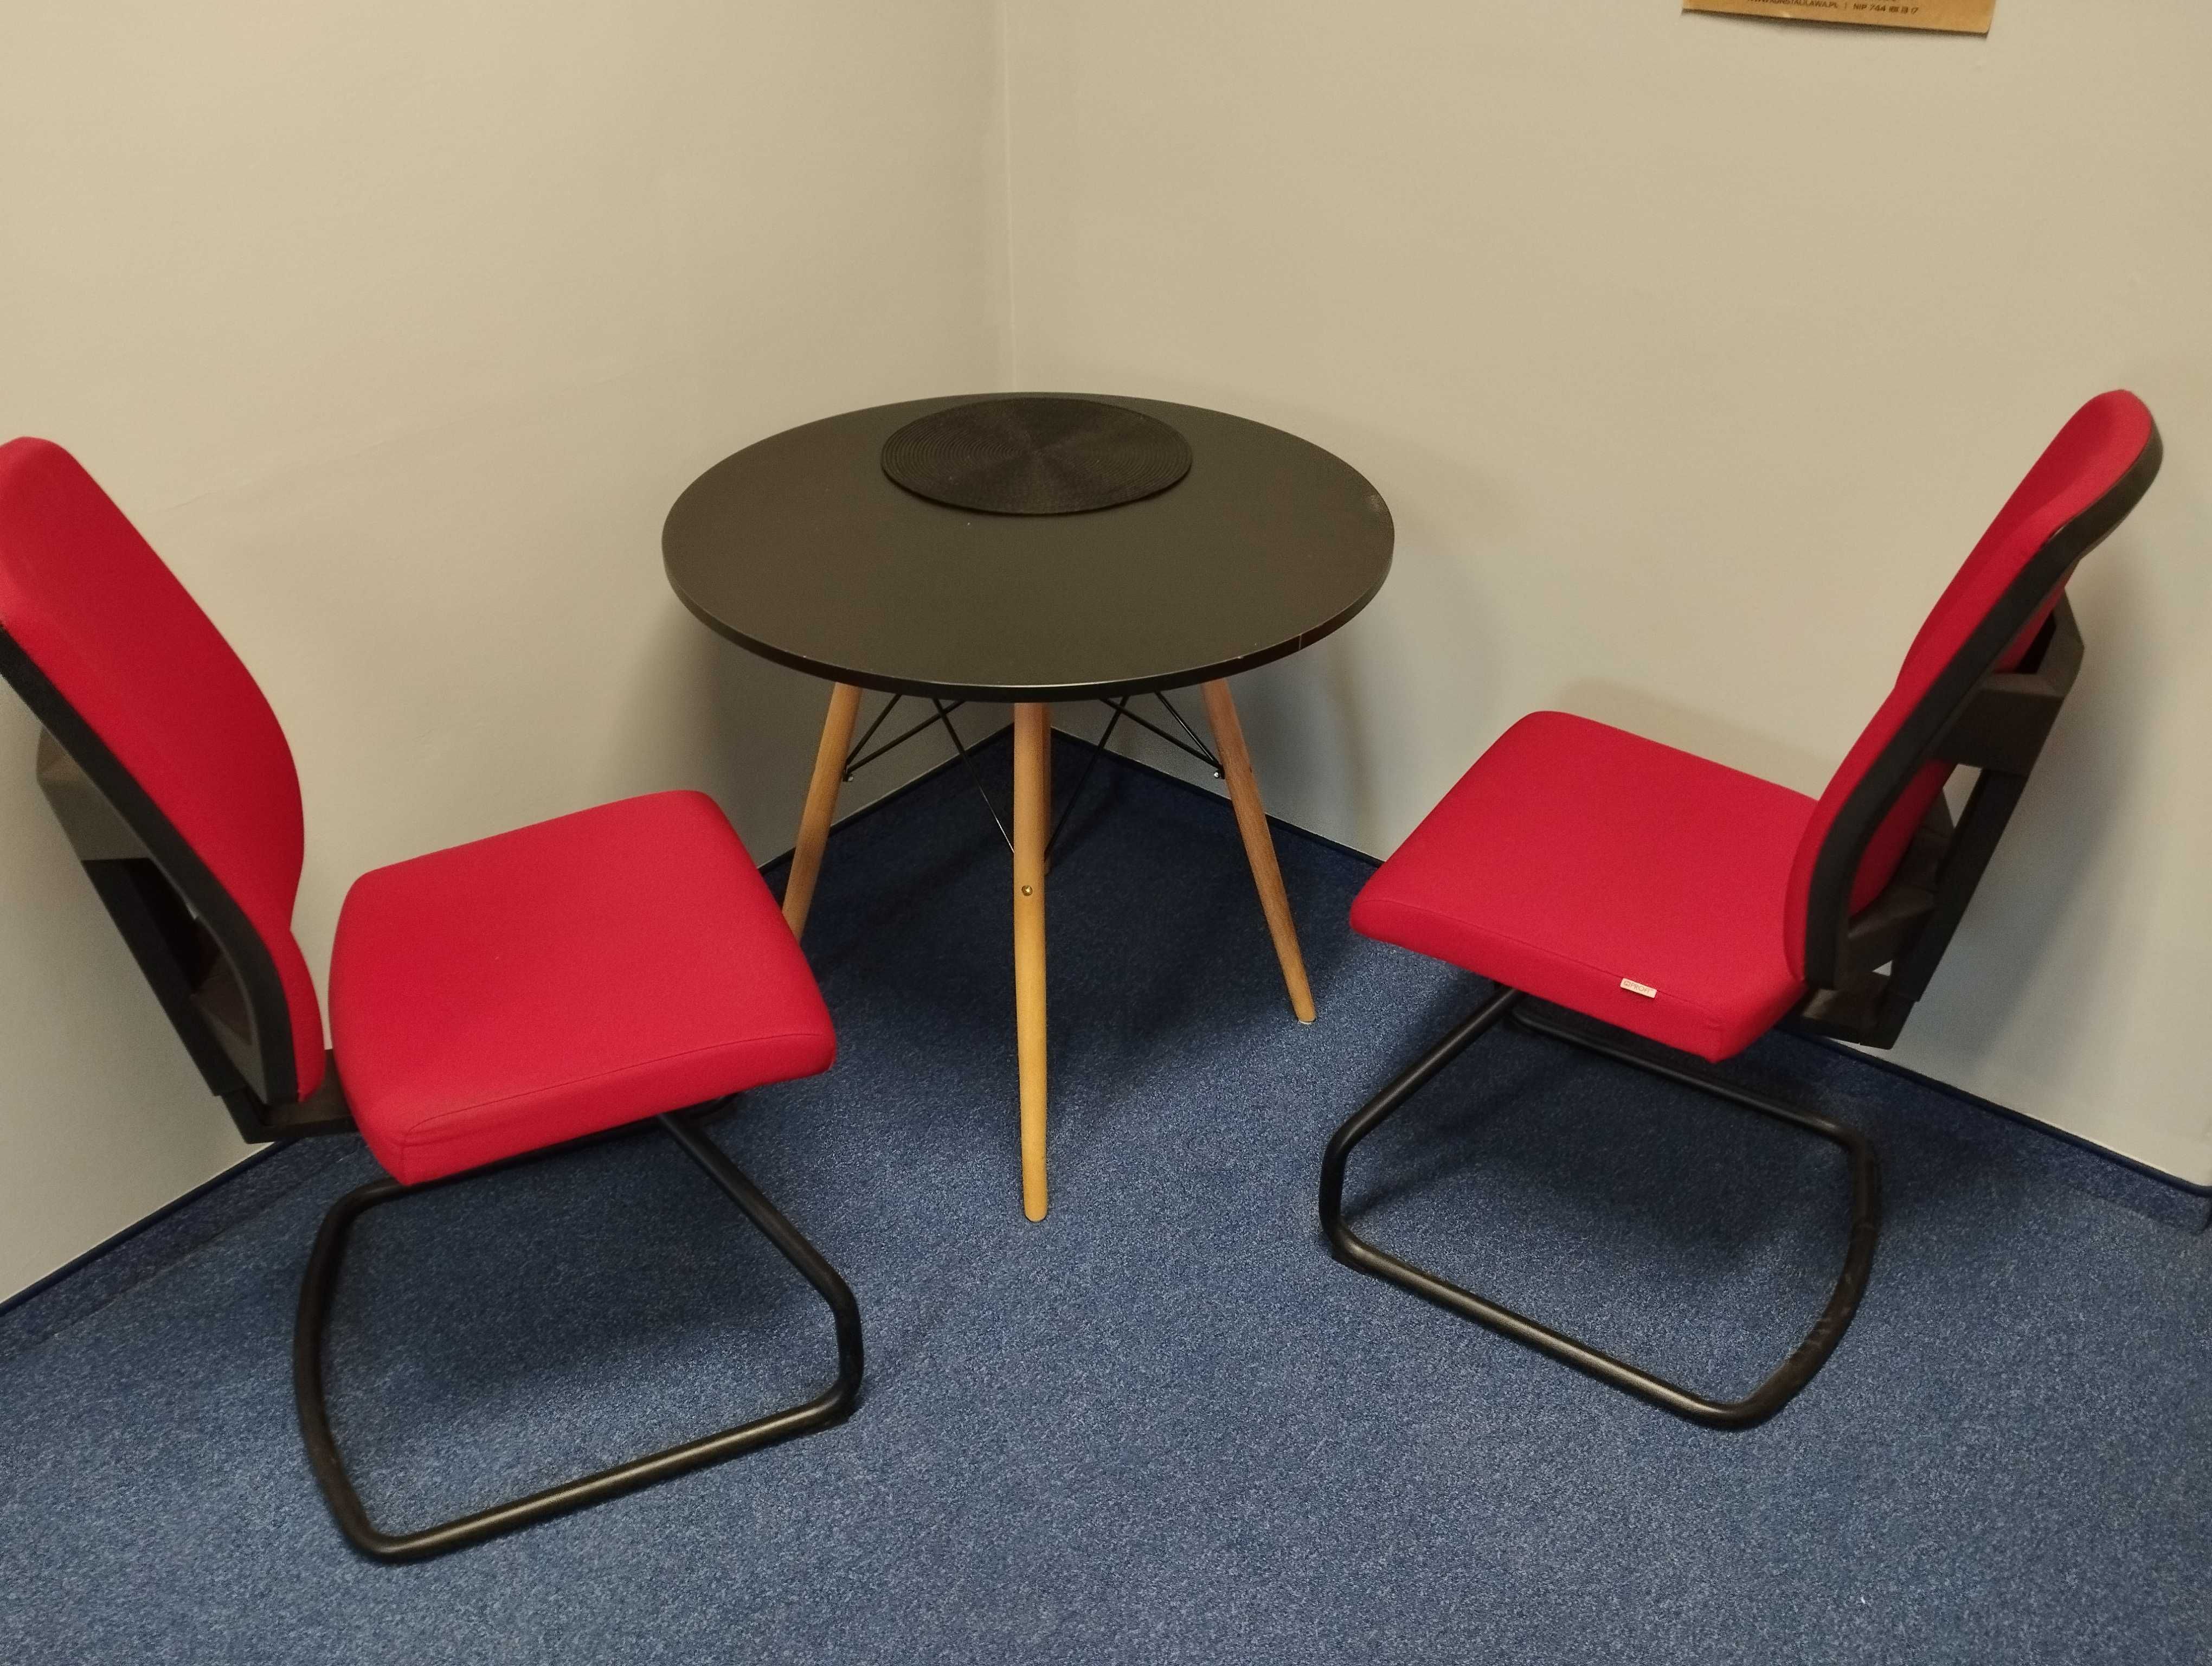 Meble biurowe KOMPLET! - szafa, biurko, krzesła - do biura